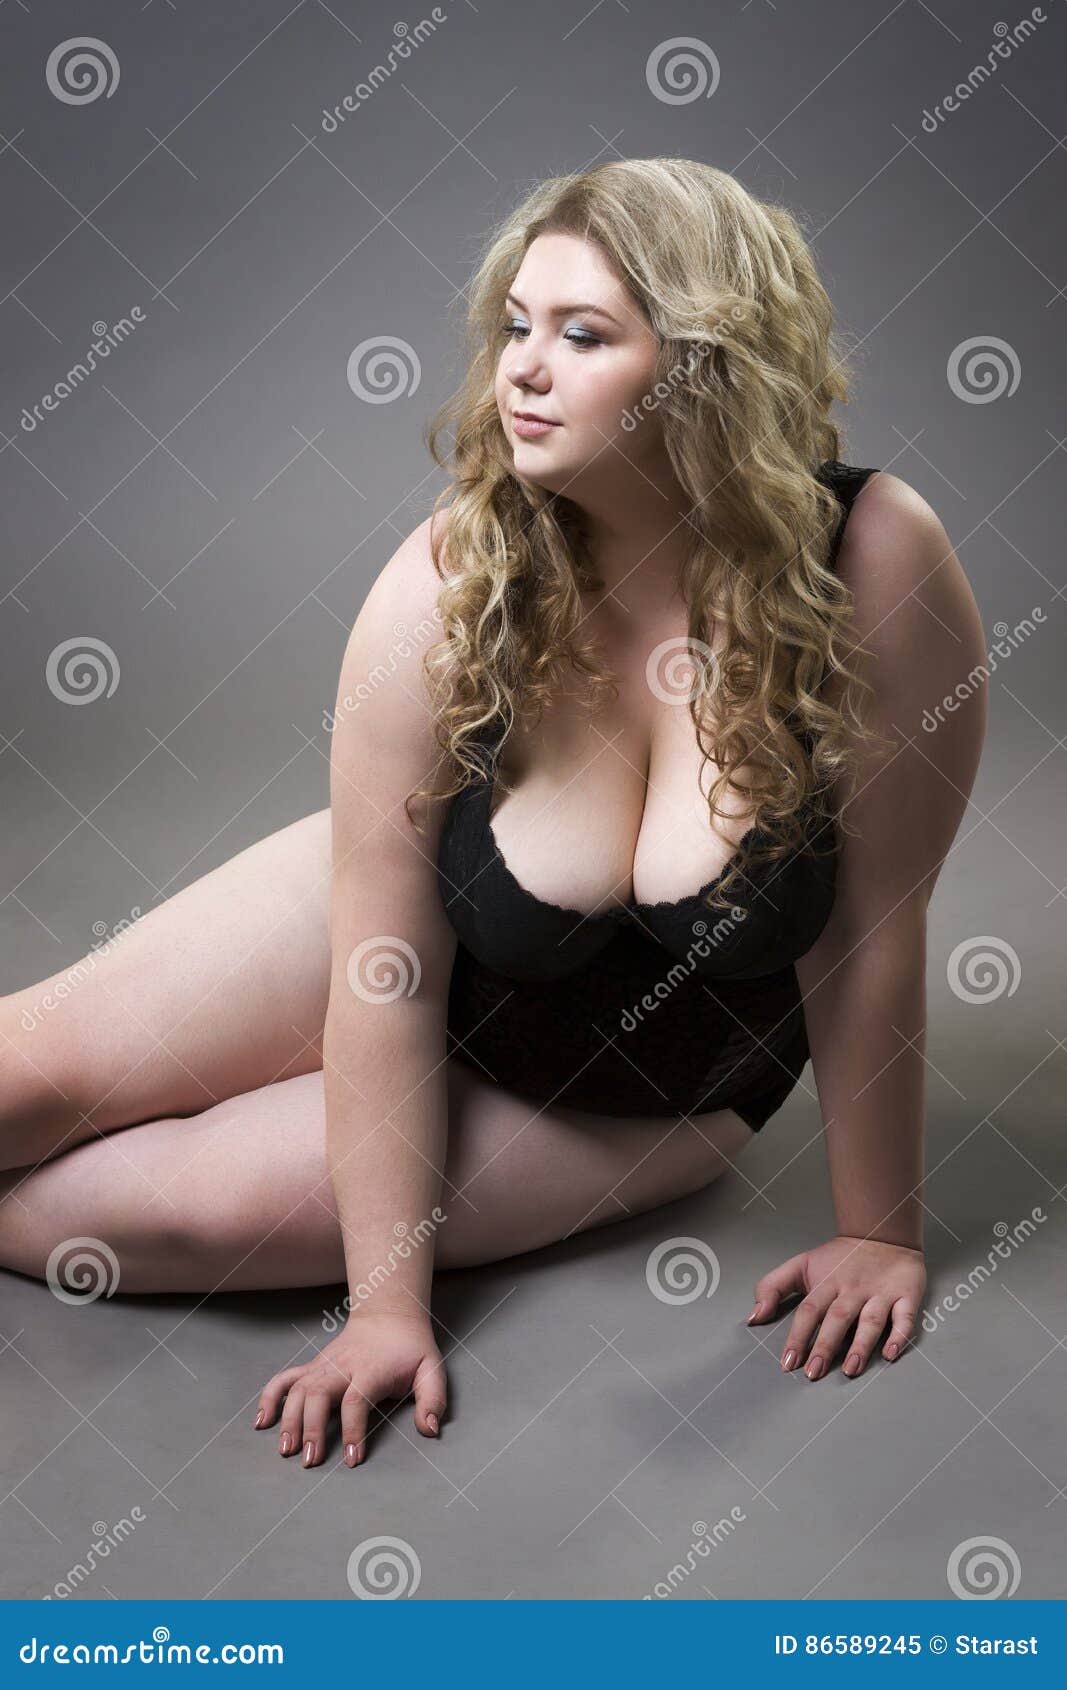 david migliorini add photo women with huge natural tits